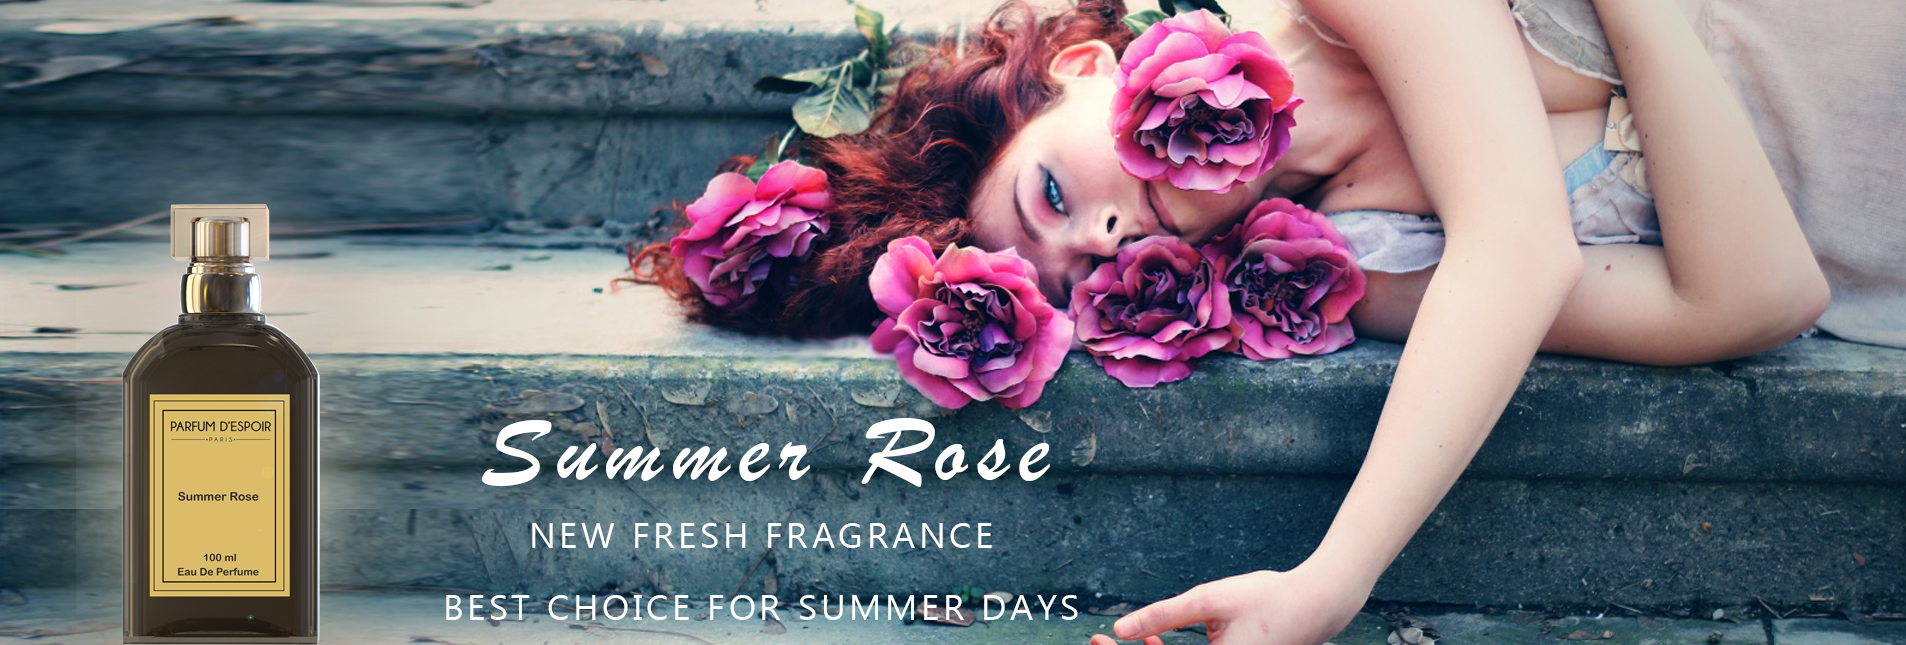 Summer Rose Perfume - aromatic floral perfume - summer perfume - parfum d'espoir - france